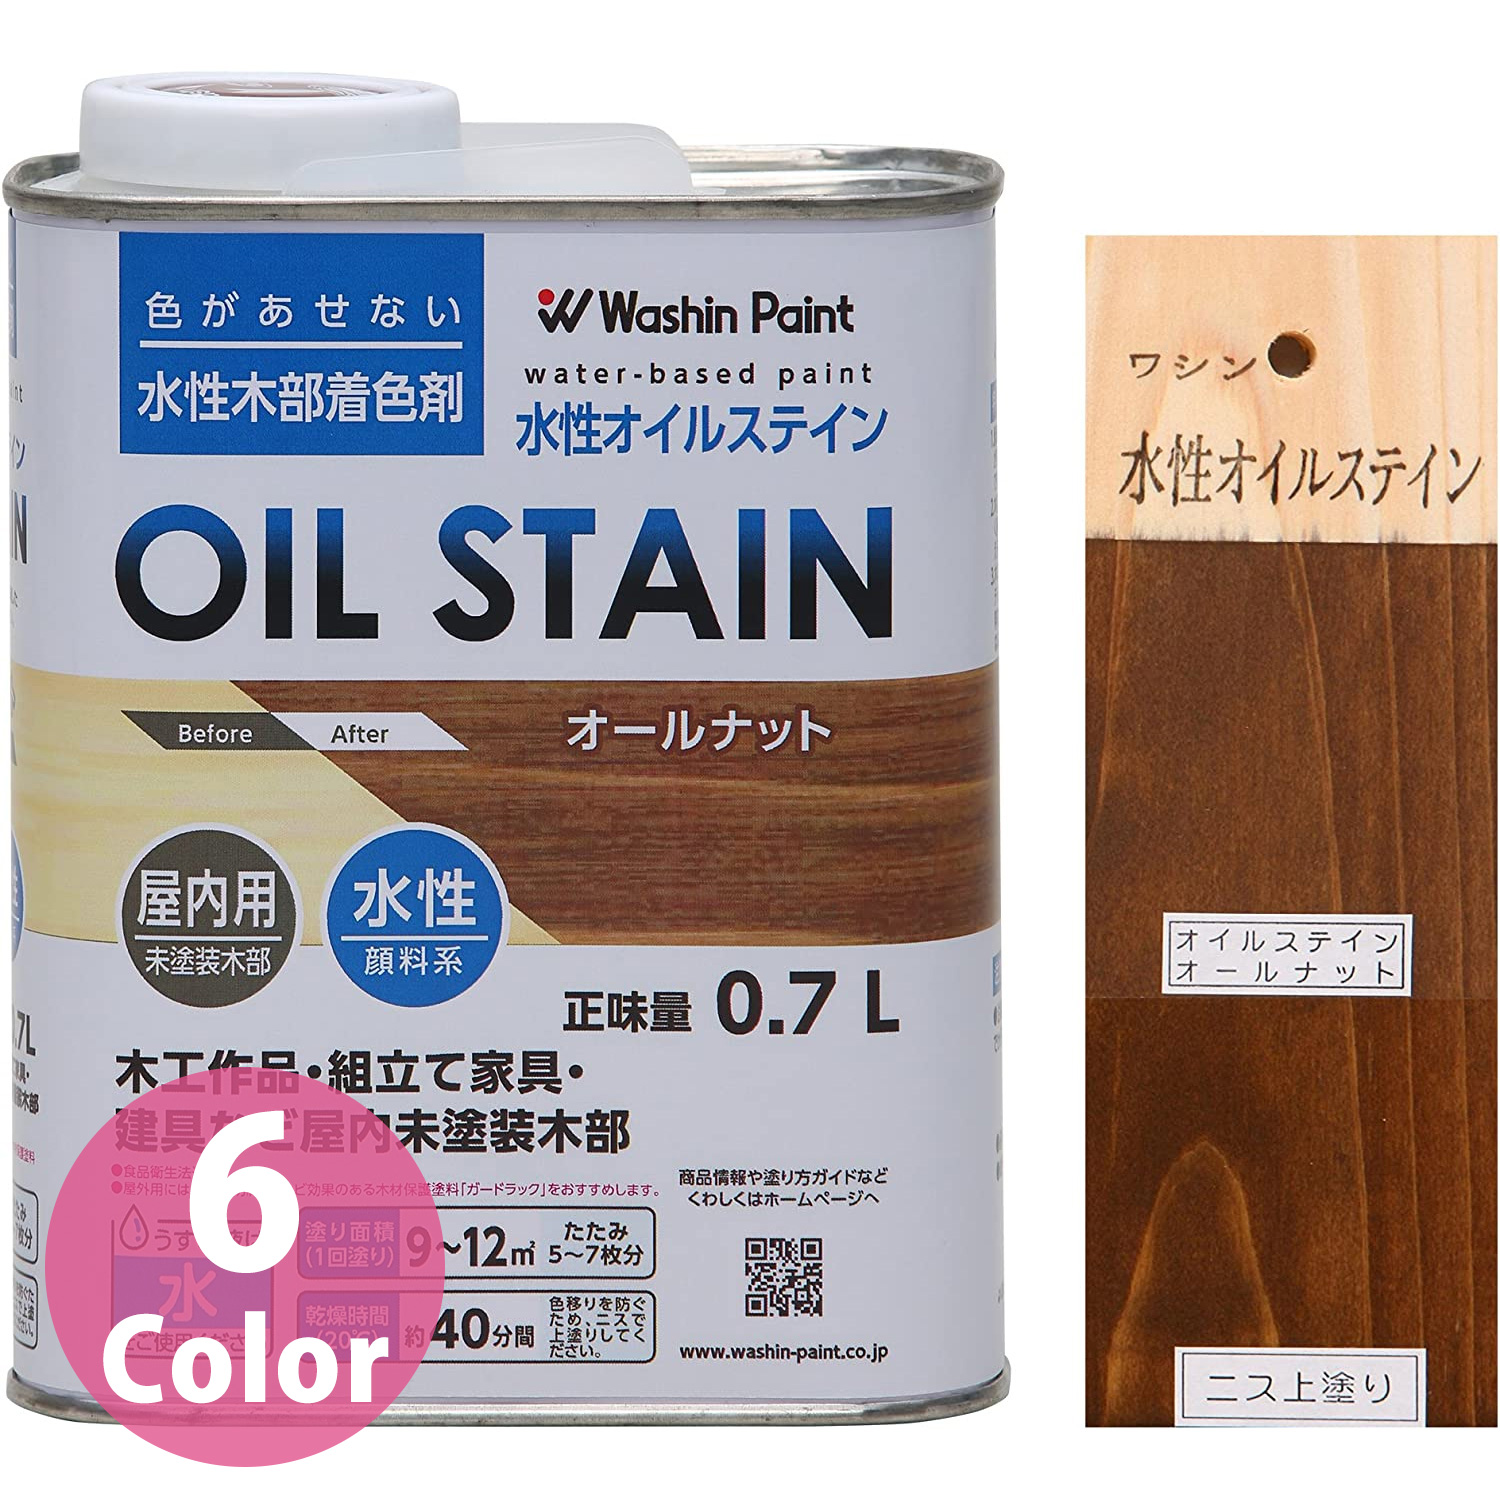 WPSO water-based oil stain 0.7L (pcs)